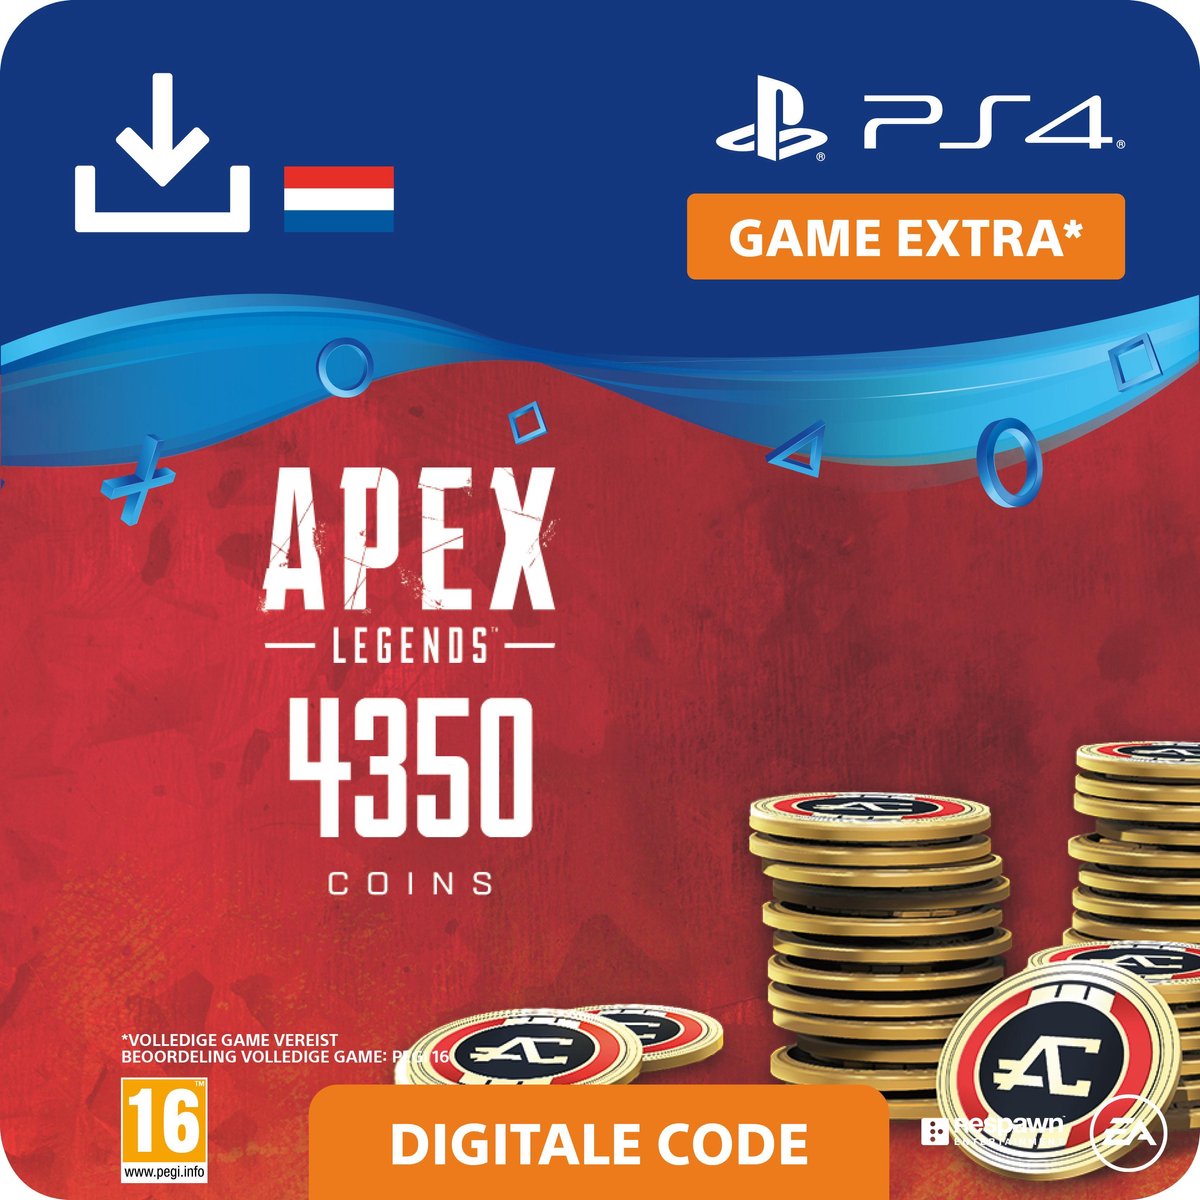 Apex Legends - digitale valuta - 4.350 Apex Coins - NL - PS4 download - Sony digitaal